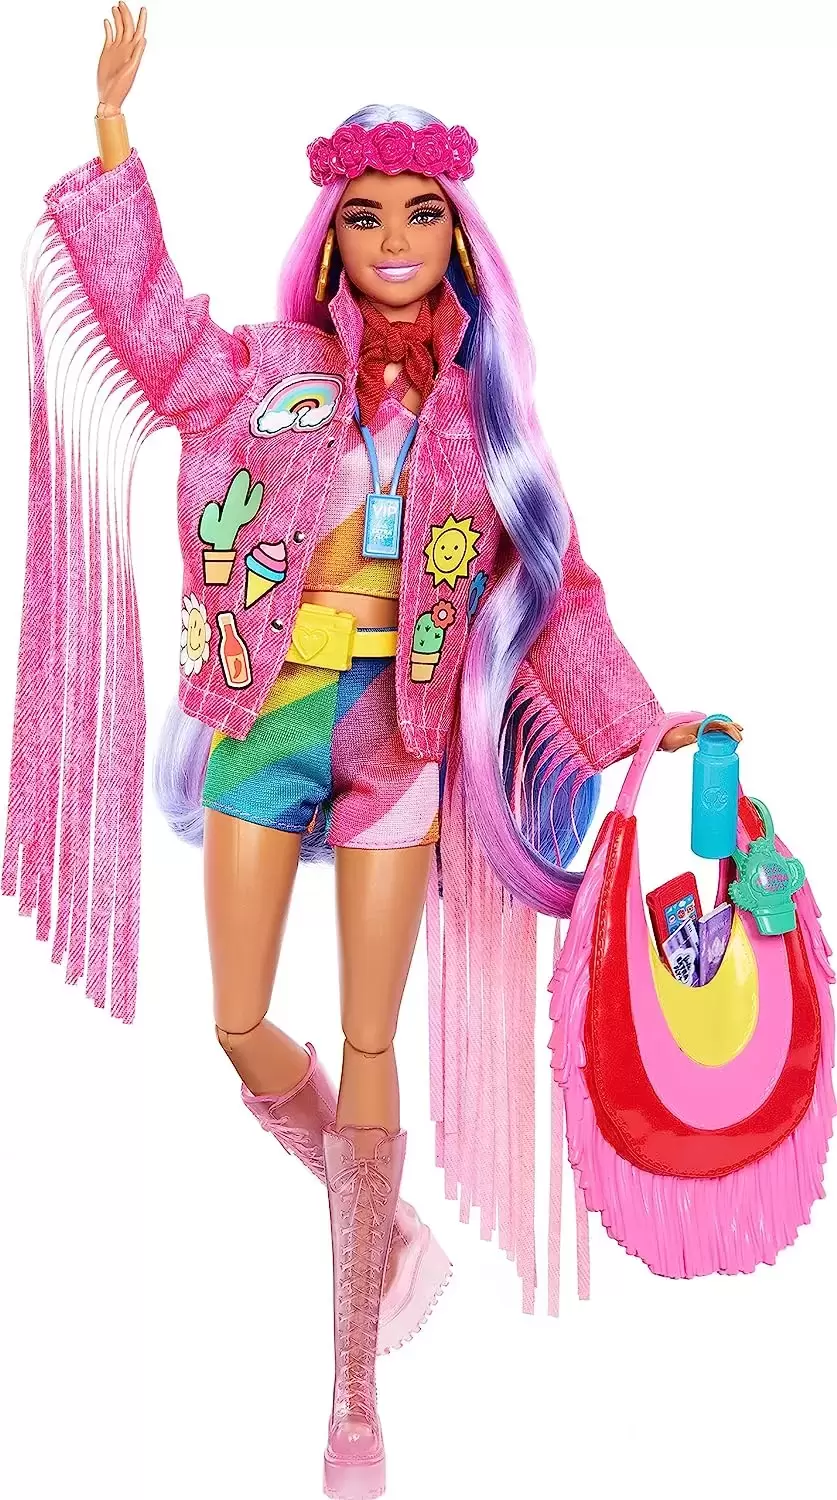 Barbie Signature Ballet Wishes Doll - Shop Action Figures & Dolls